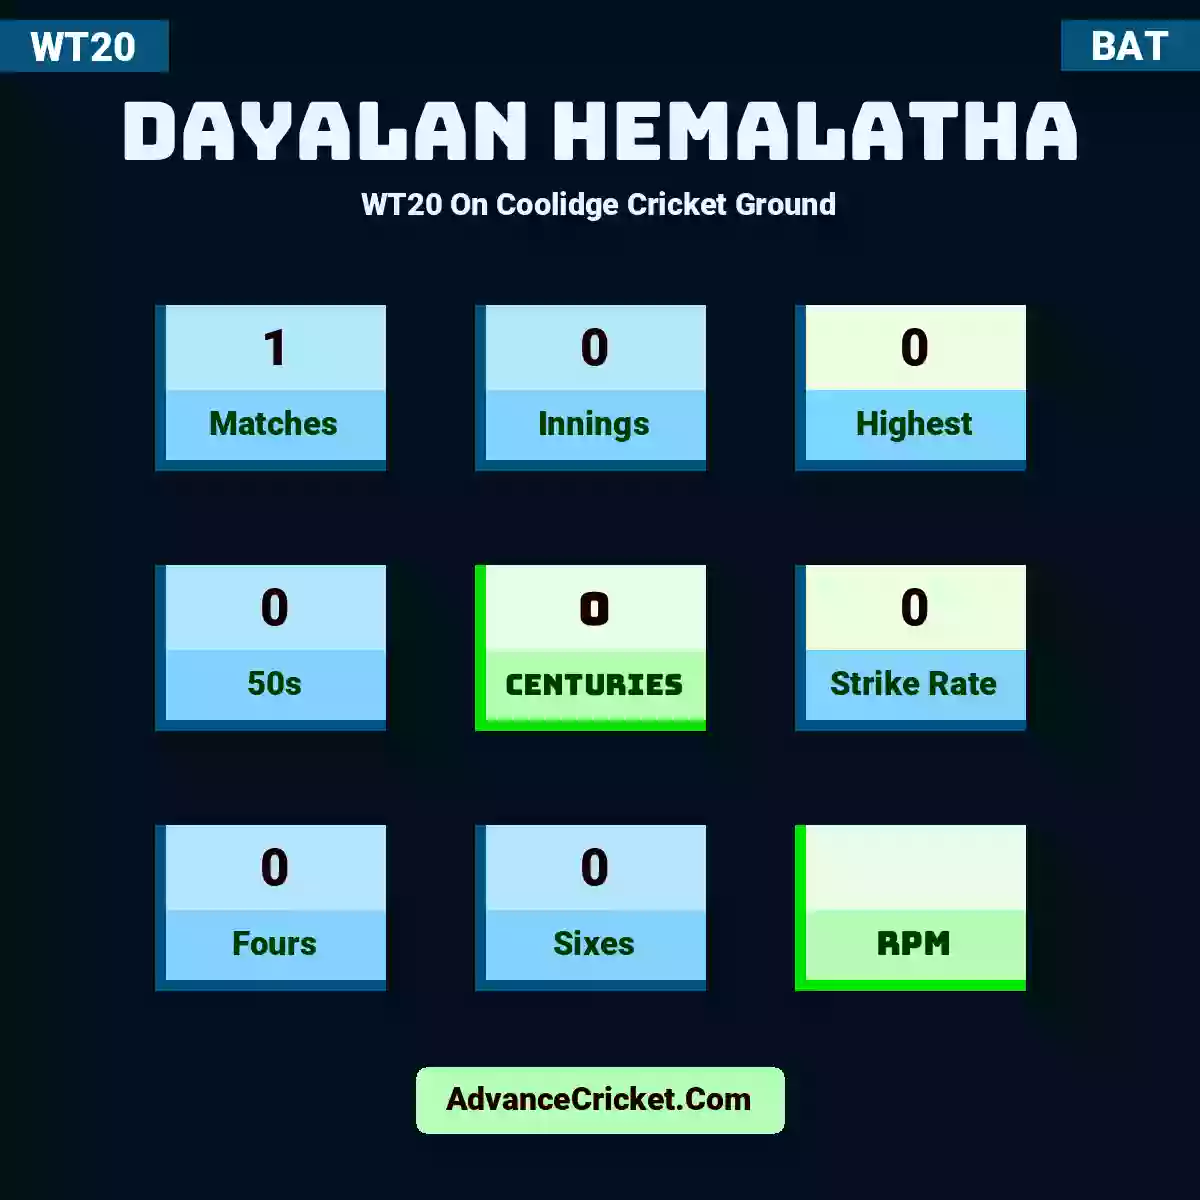 Dayalan Hemalatha WT20  On Coolidge Cricket Ground, Dayalan Hemalatha played 1 matches, scored 0 runs as highest, 0 half-centuries, and 0 centuries, with a strike rate of 0. D.Hemalatha hit 0 fours and 0 sixes.